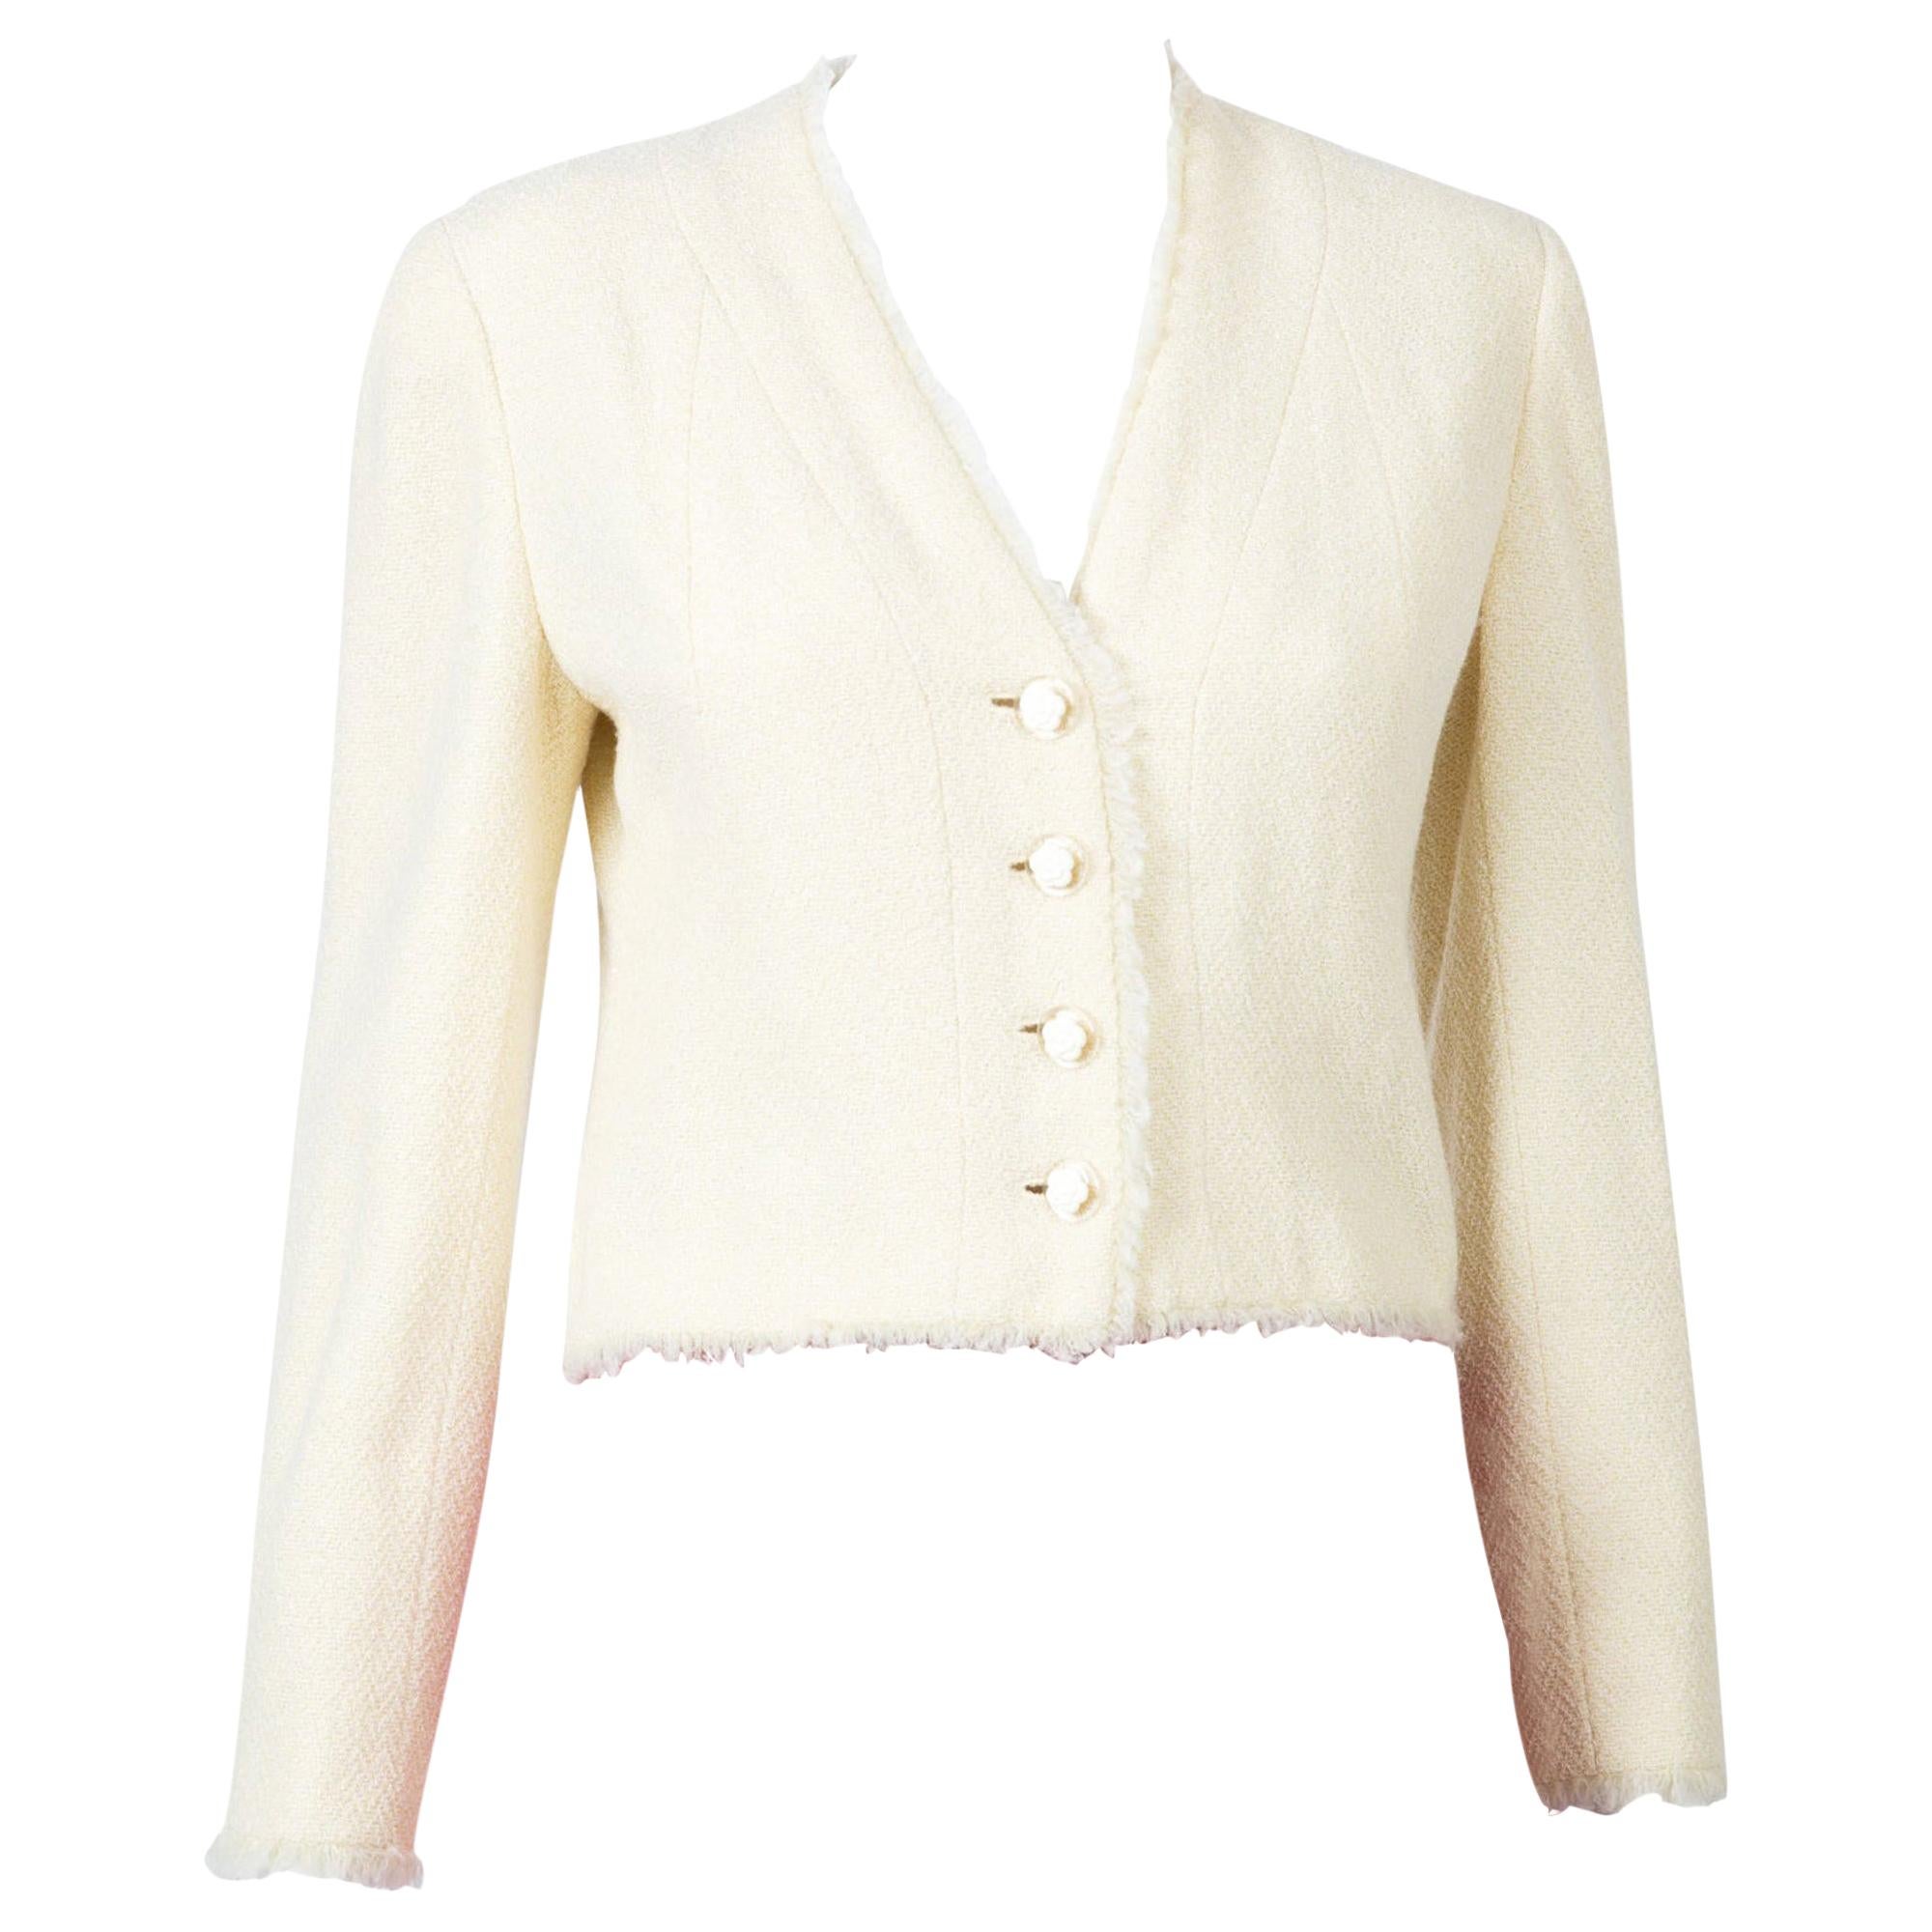 Chanel Ivory Lurex Tweed Boucle Jacket 2000s Croisiere